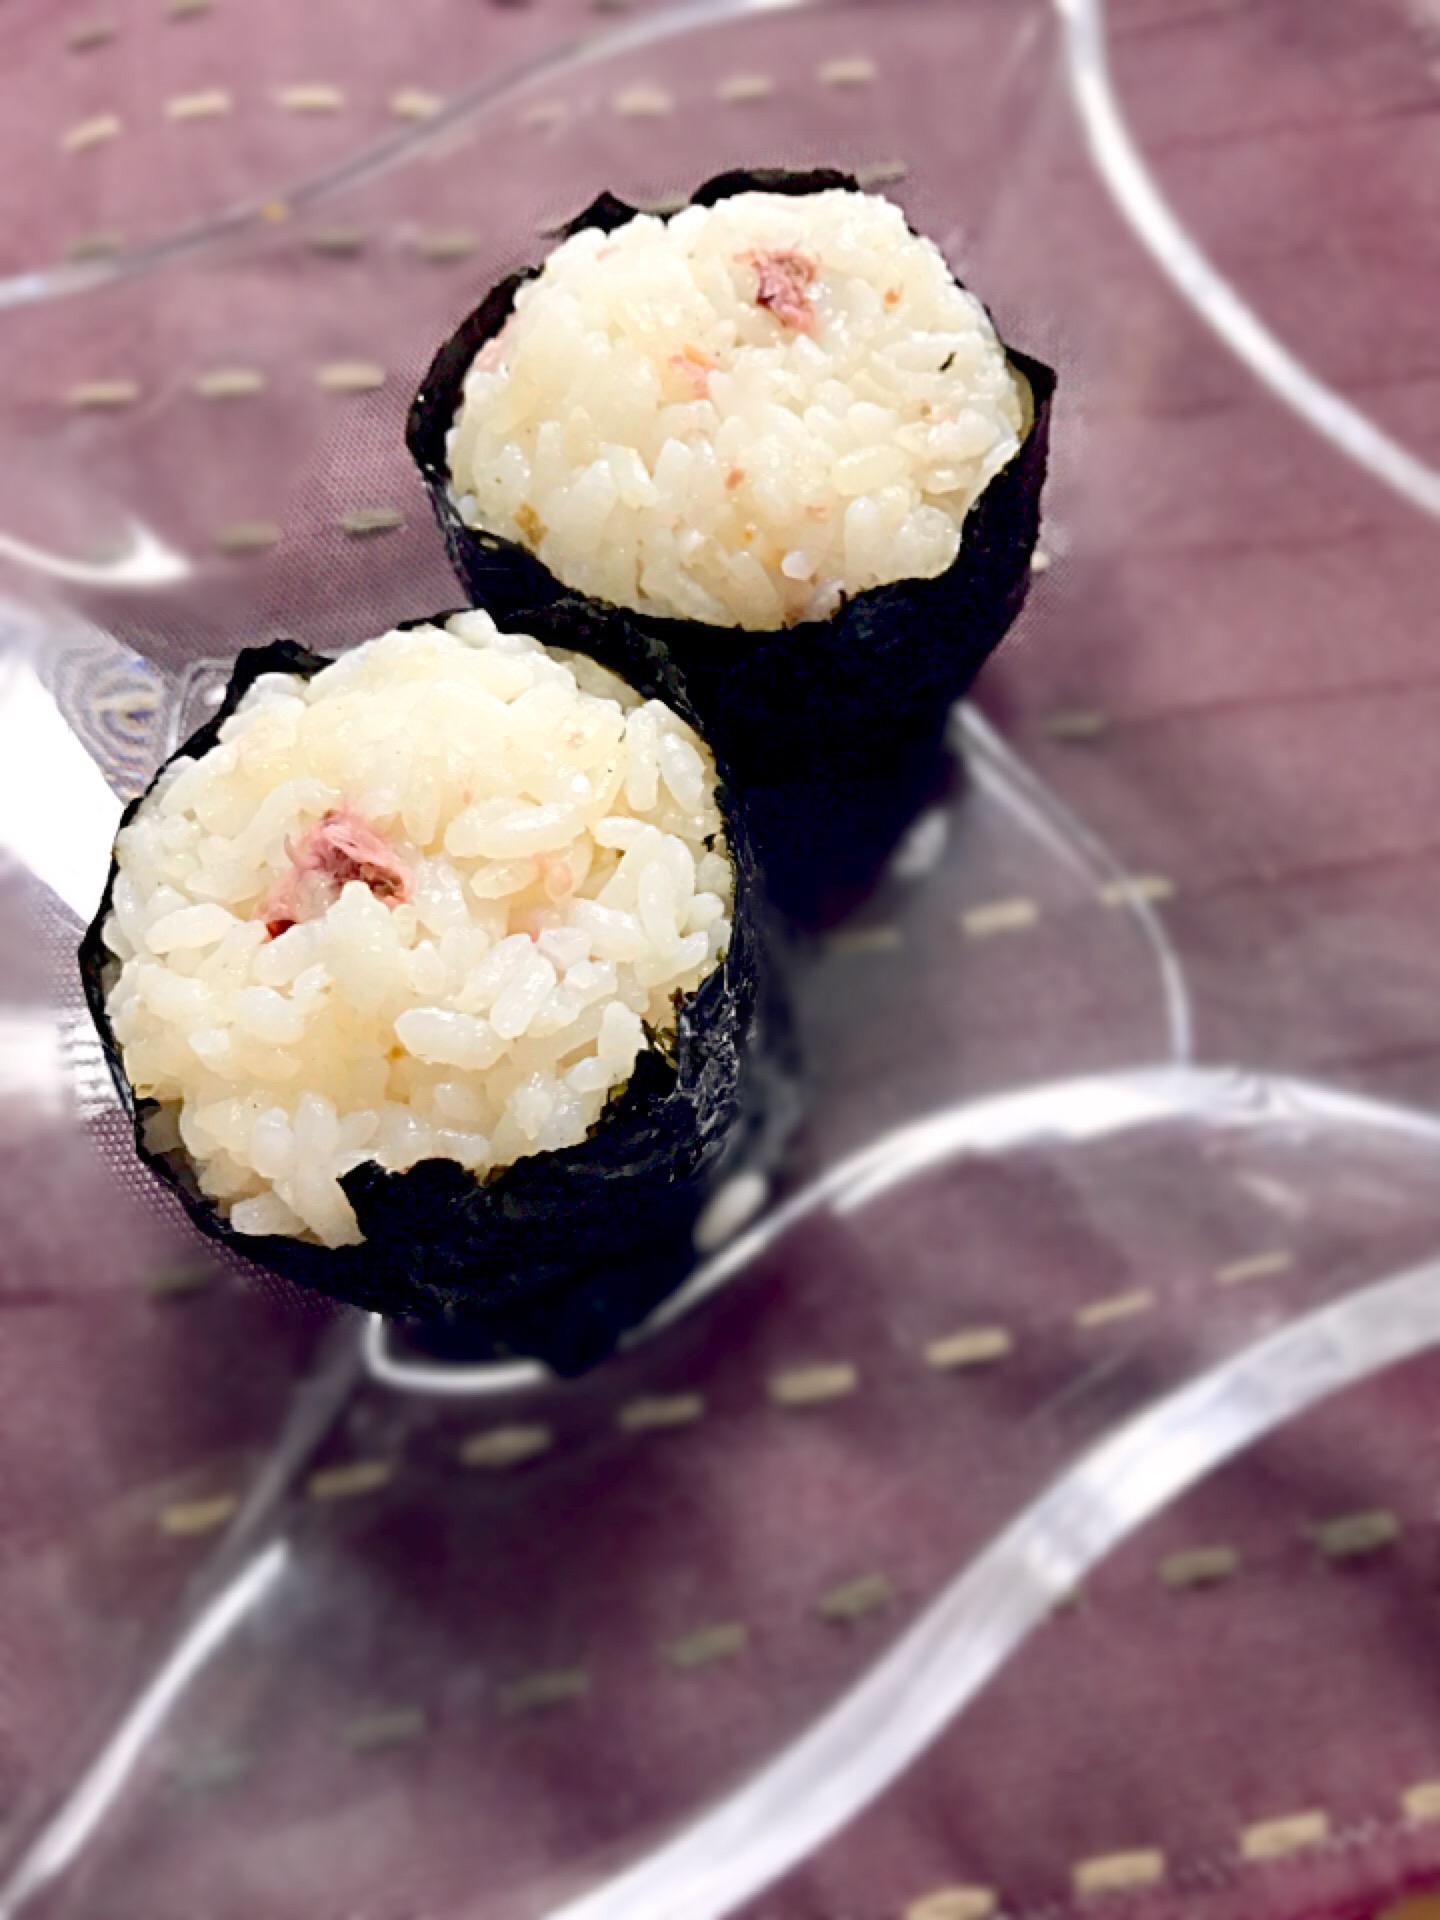 Sakura rice ball 
桜風おにぎり